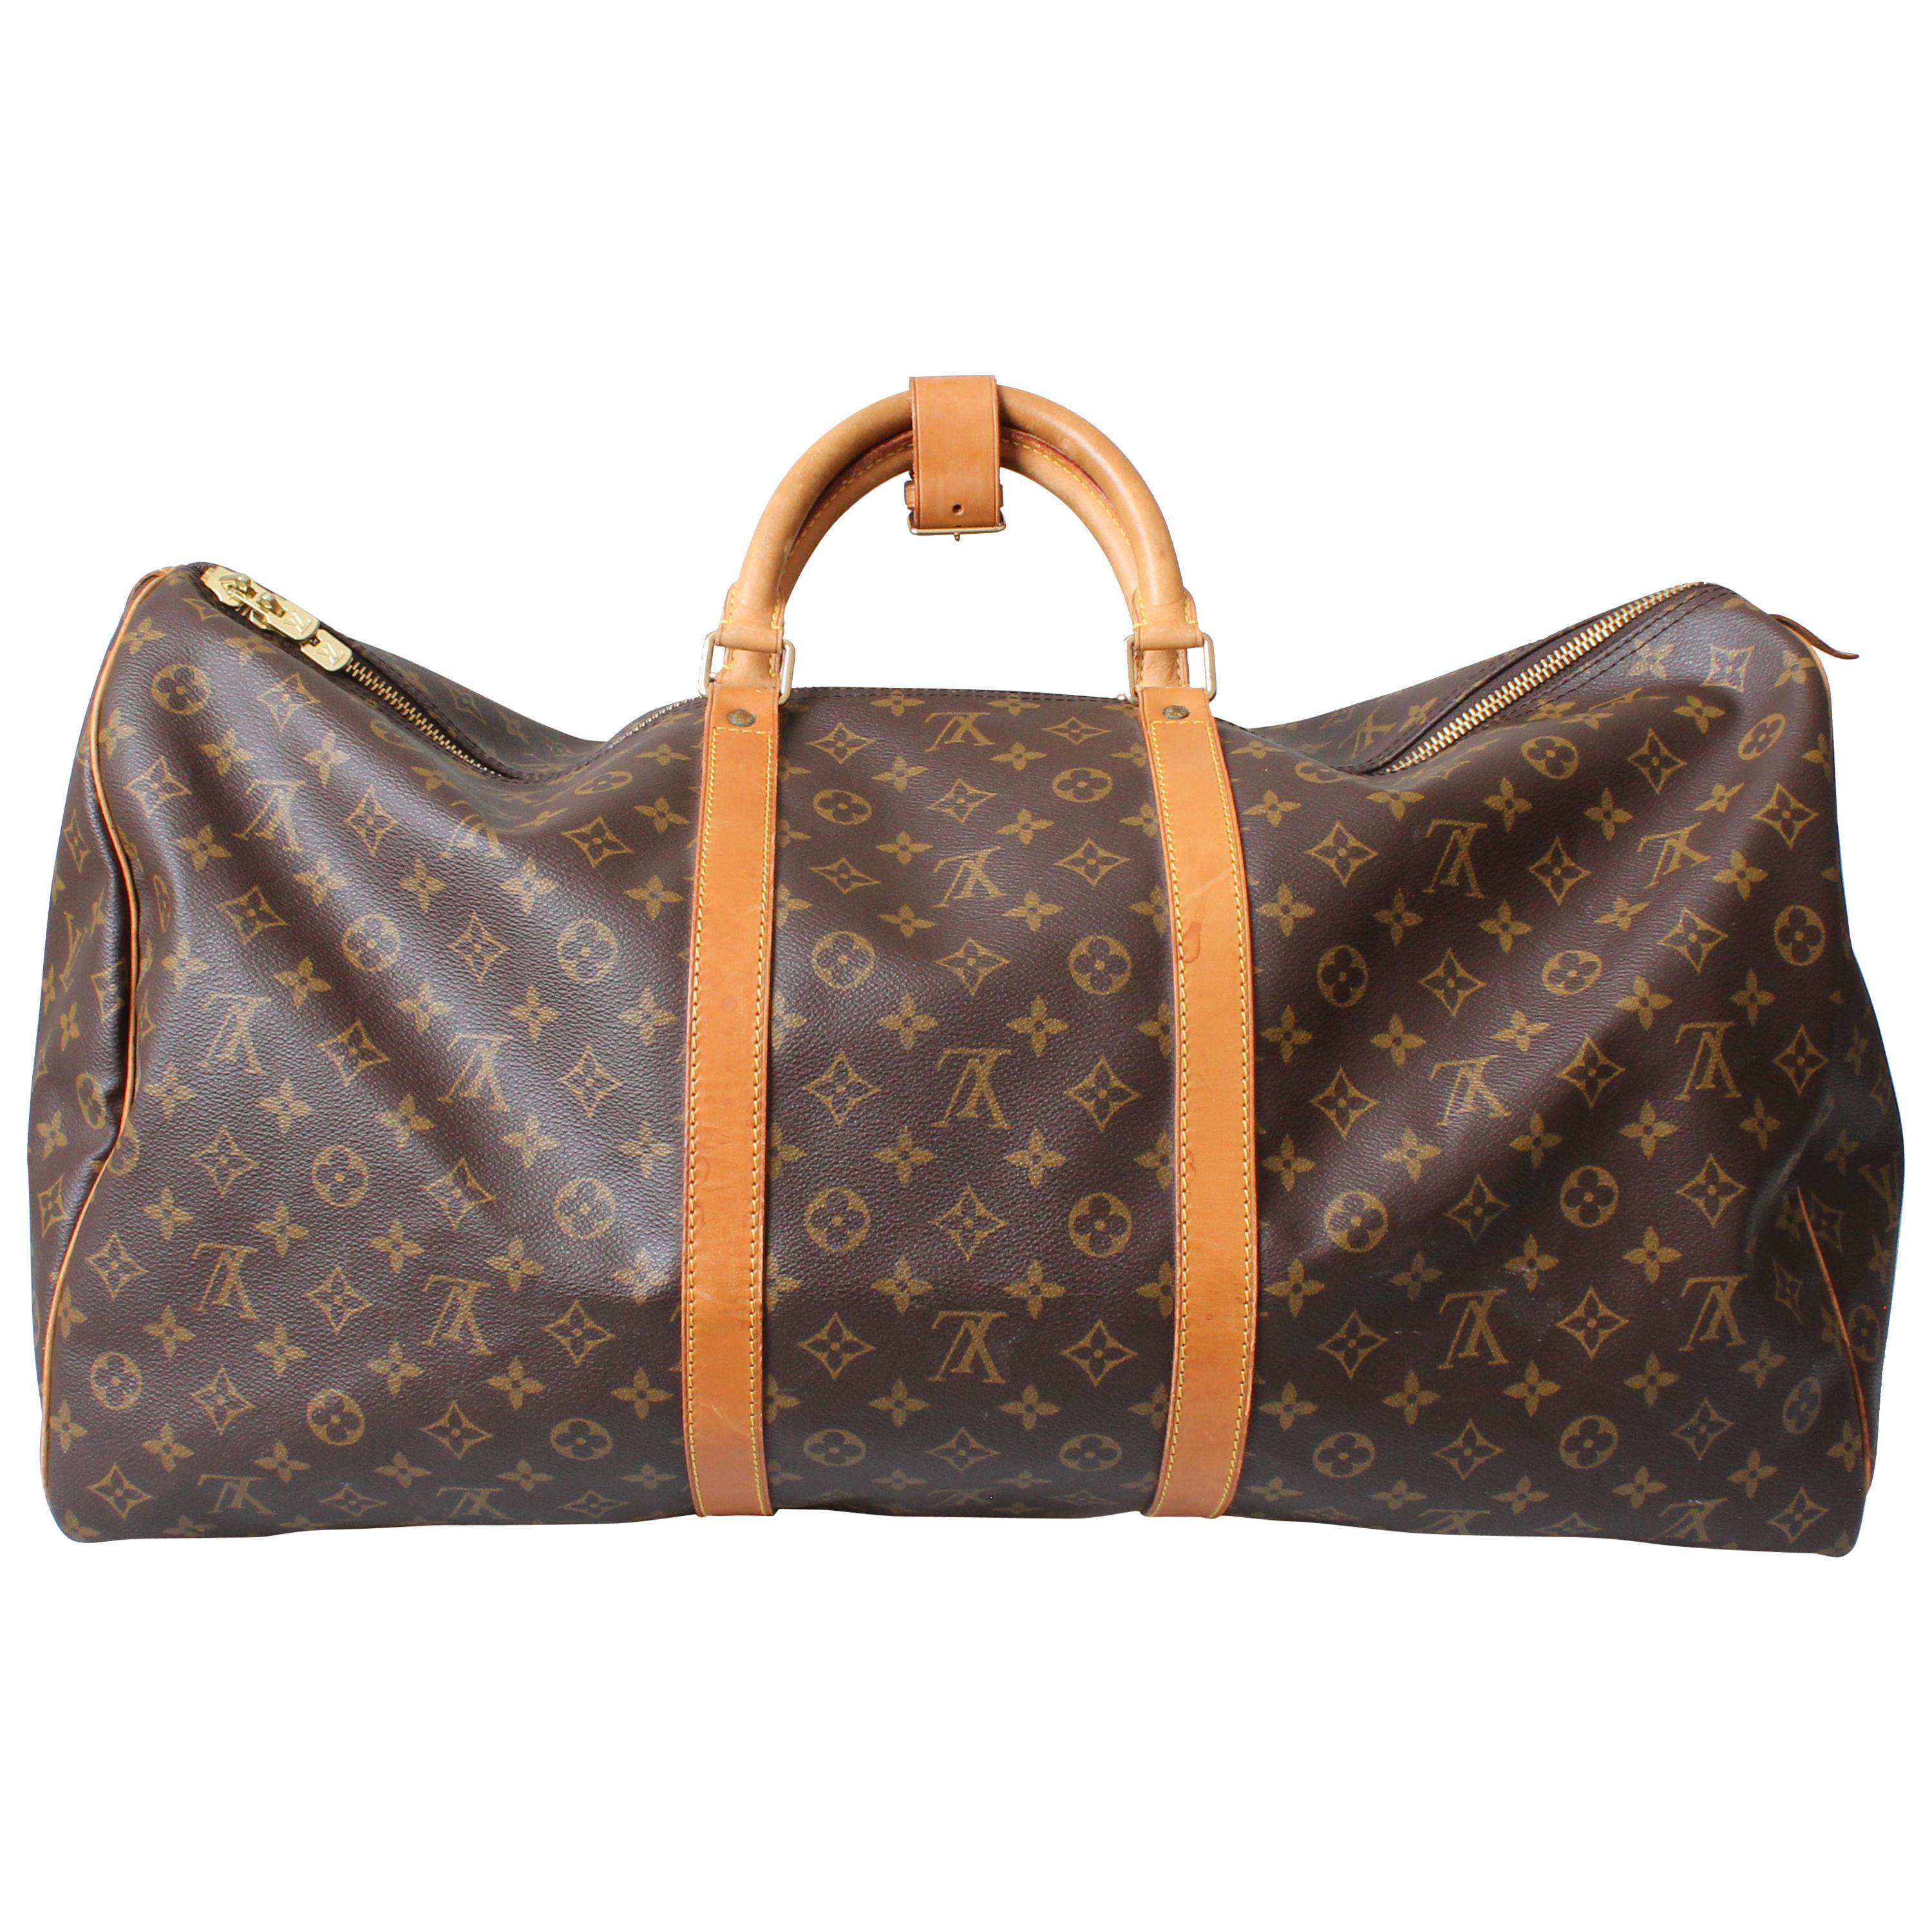 Louis Vuitton Duffle Bag: Is It Worth It? - Luxury LV Keepall Bag